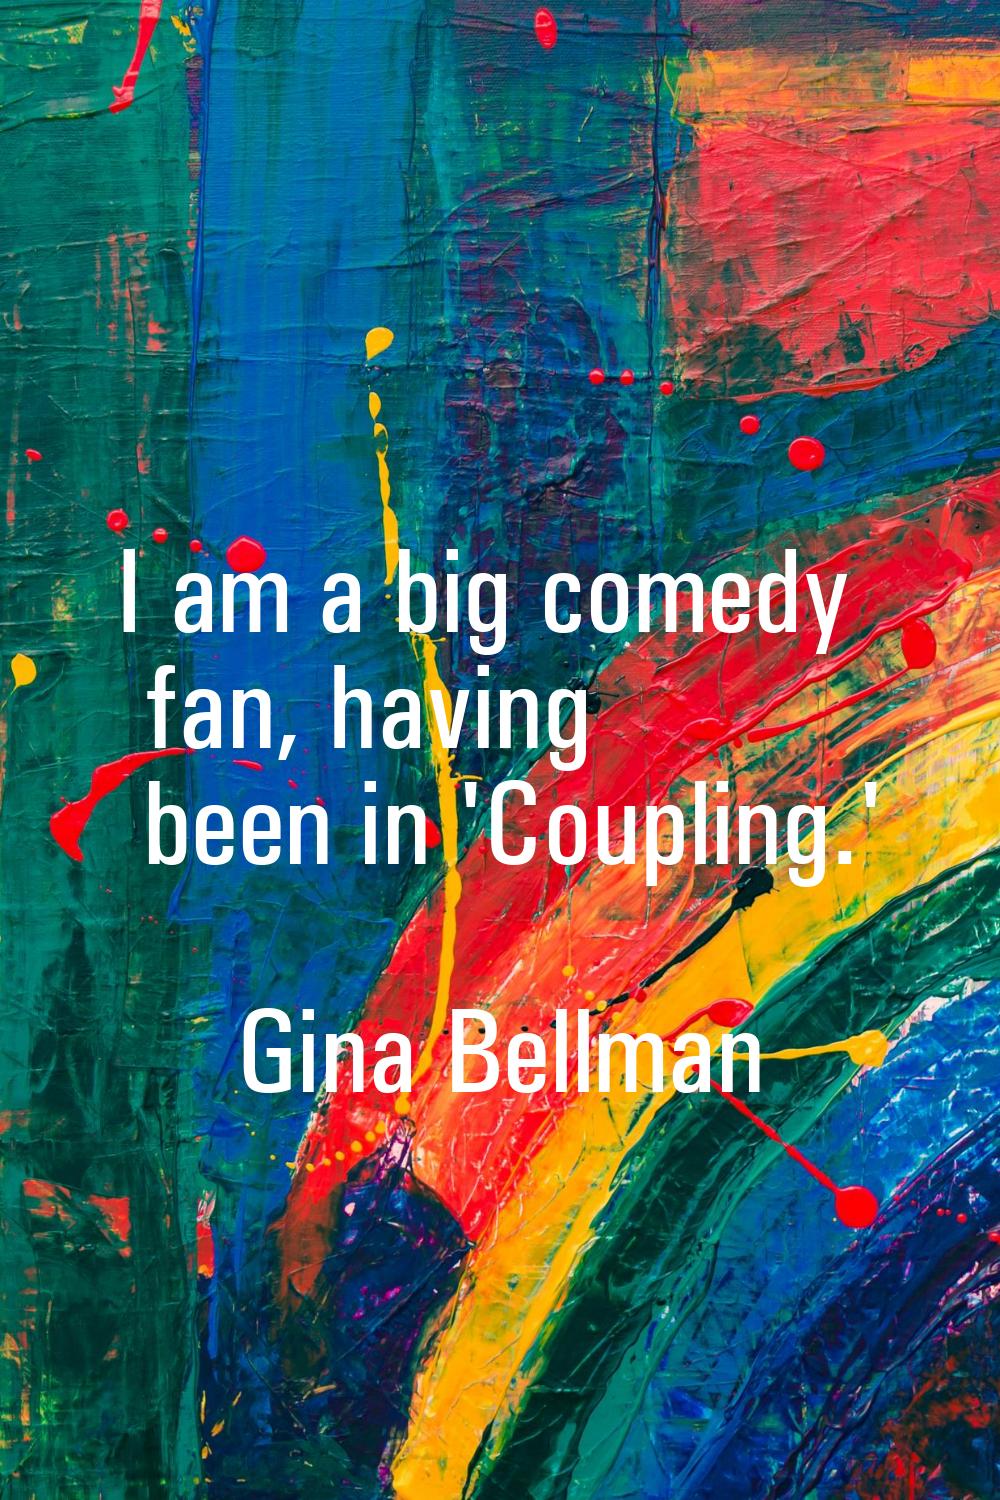 I am a big comedy fan, having been in 'Coupling.'